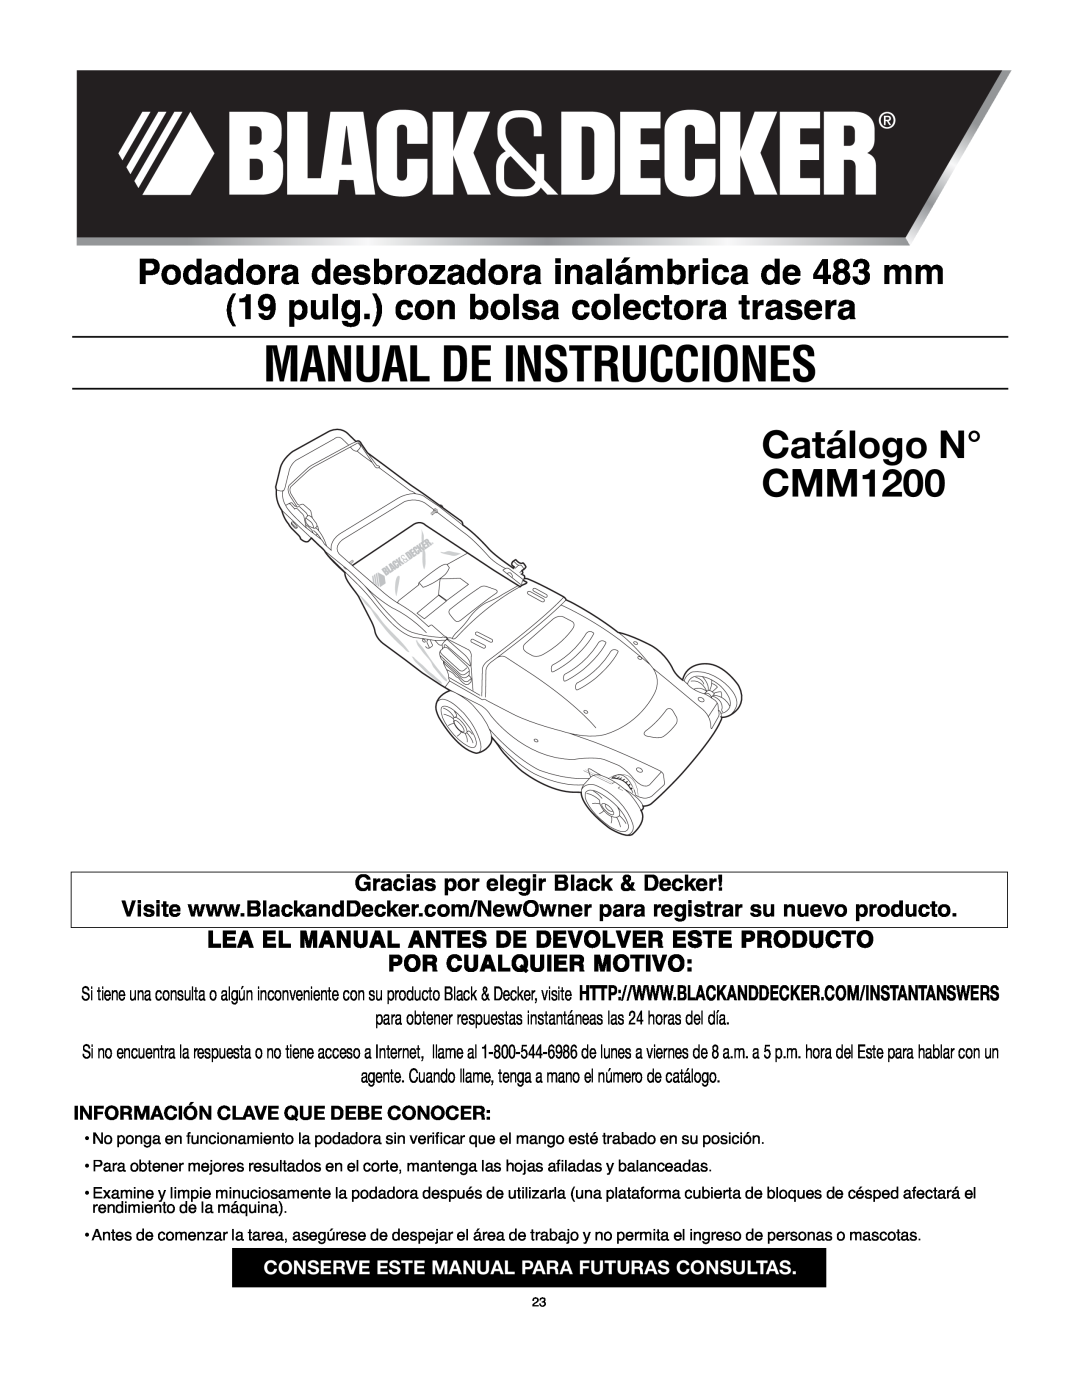 Black & Decker 90541667 Manual De Instrucciones, Catálogo N CMM1200, Podadora desbrozadora inalámbrica de 483 mm 